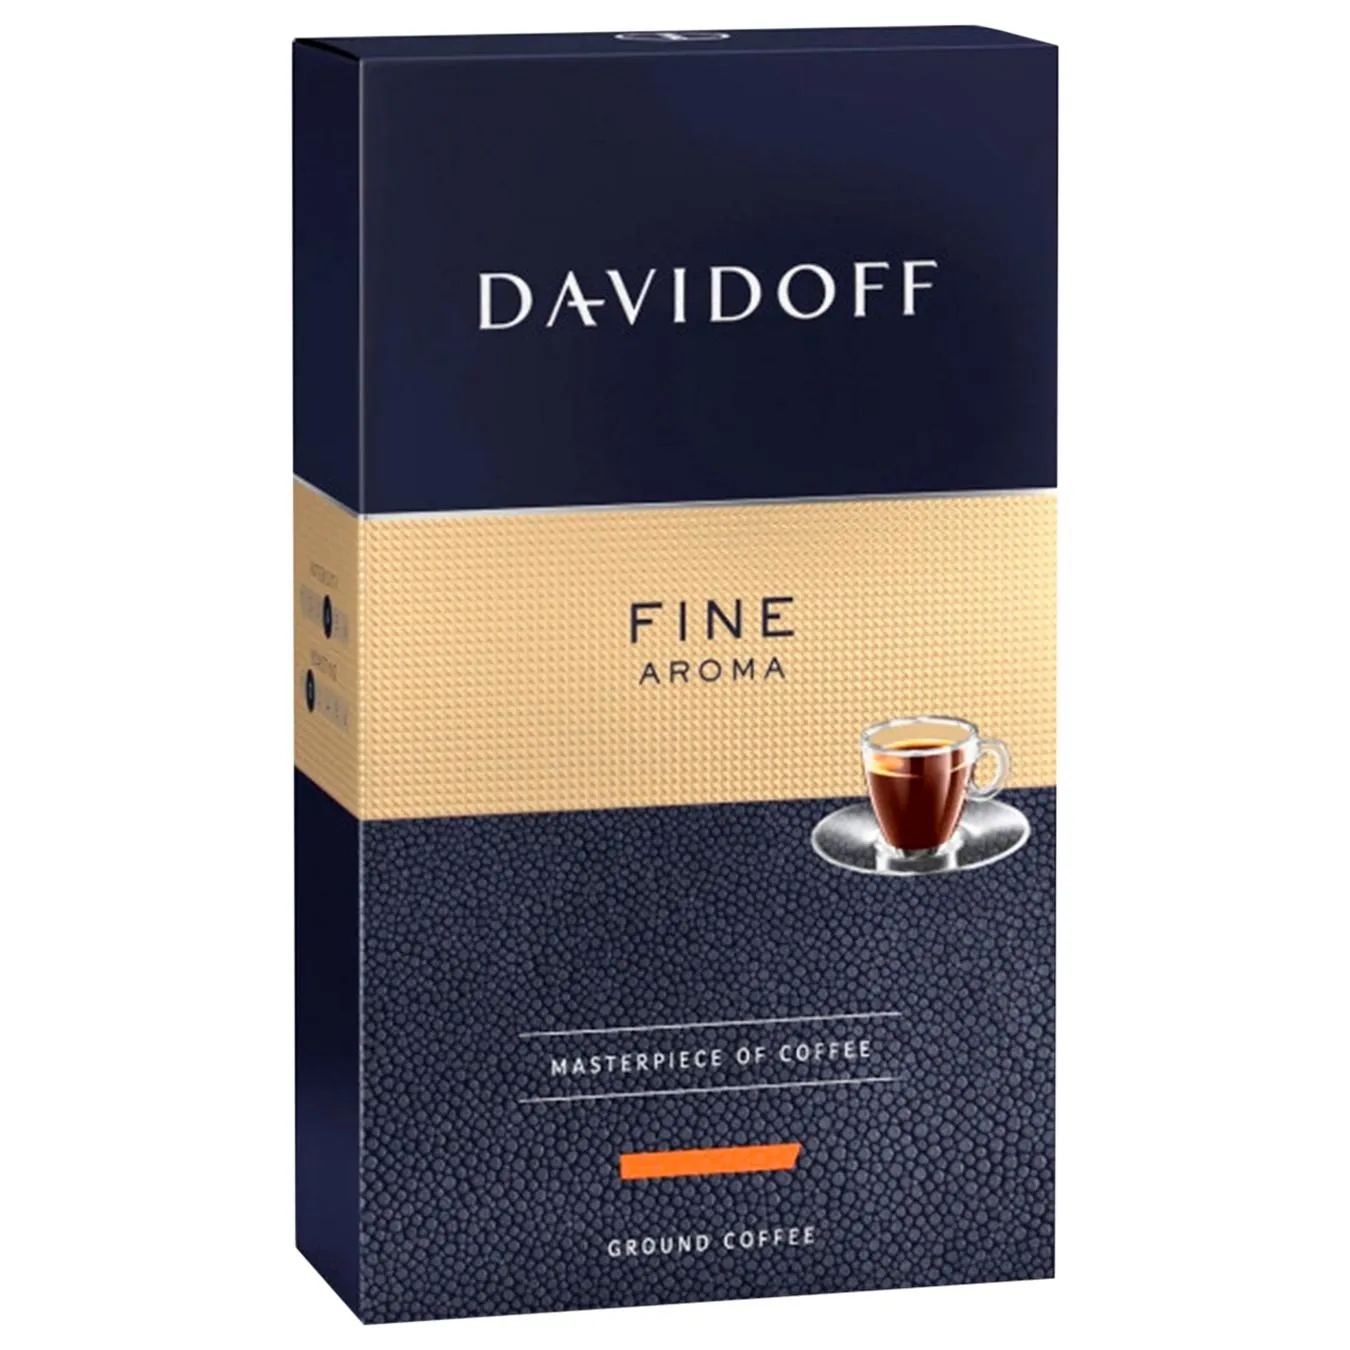 Ground coffee Tchibo Davidoff Fine aroma 250g